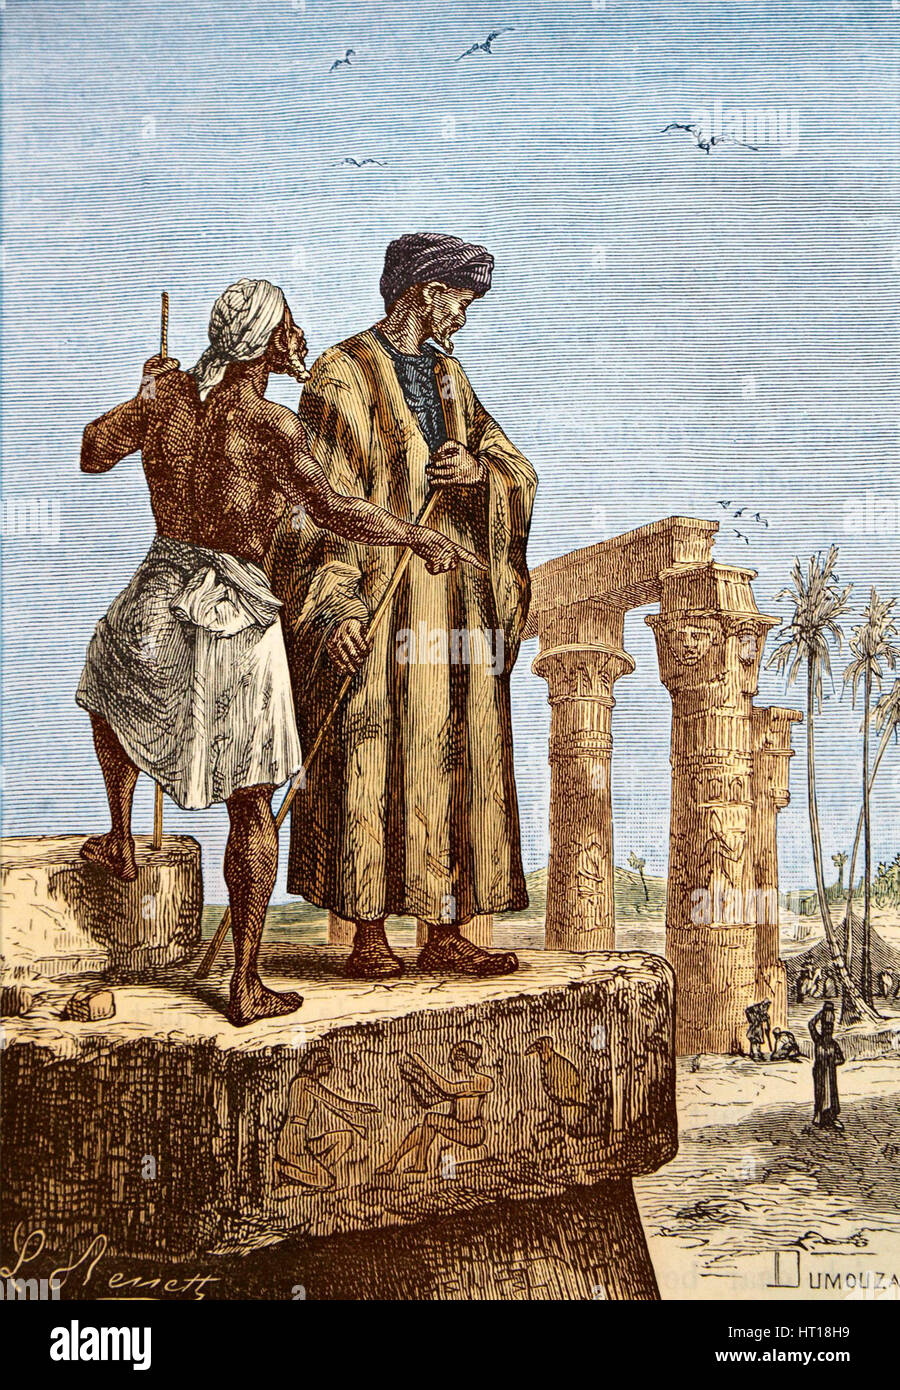 Ibn battuta hi-res stock photography and images - Alamy